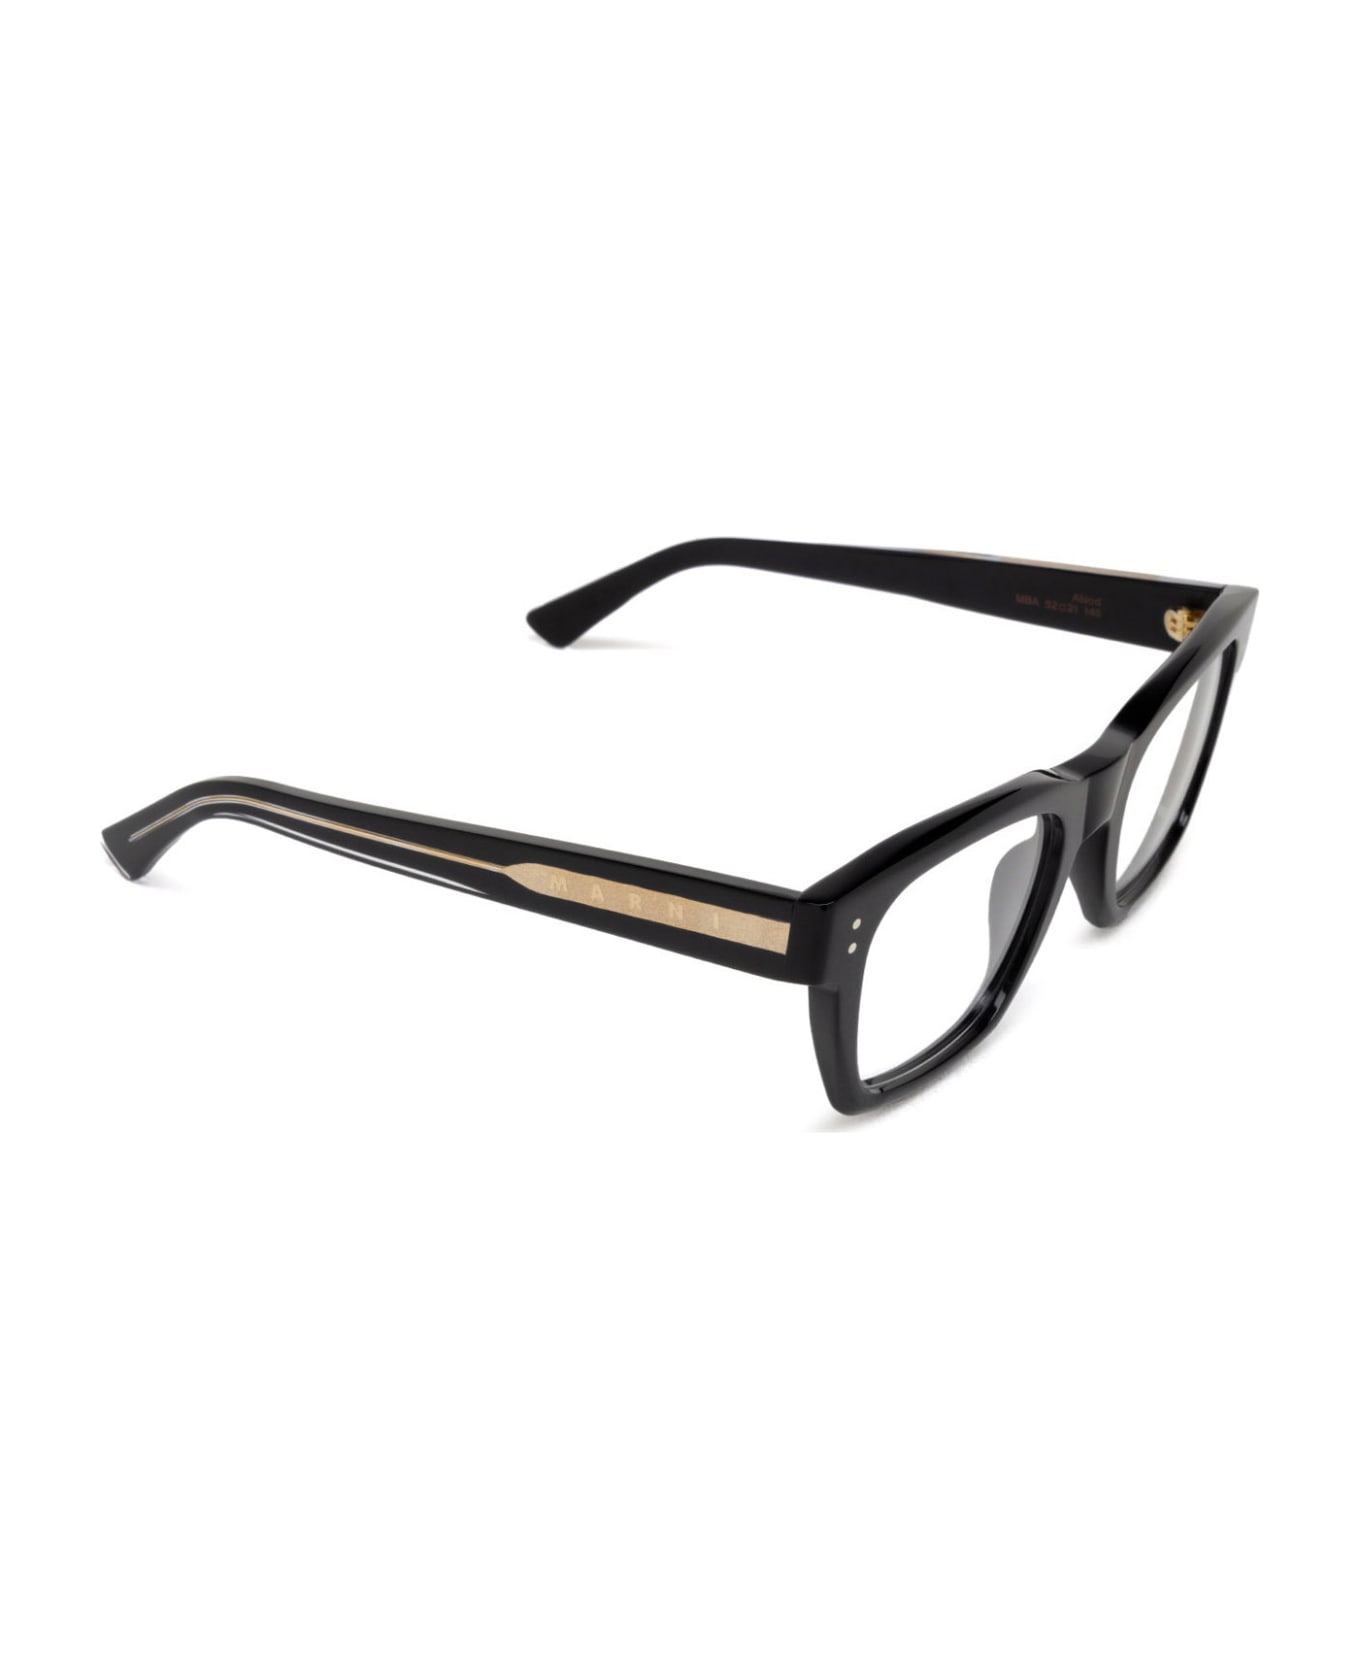 Marni Eyewear Abiod Nero Glasses - Nero